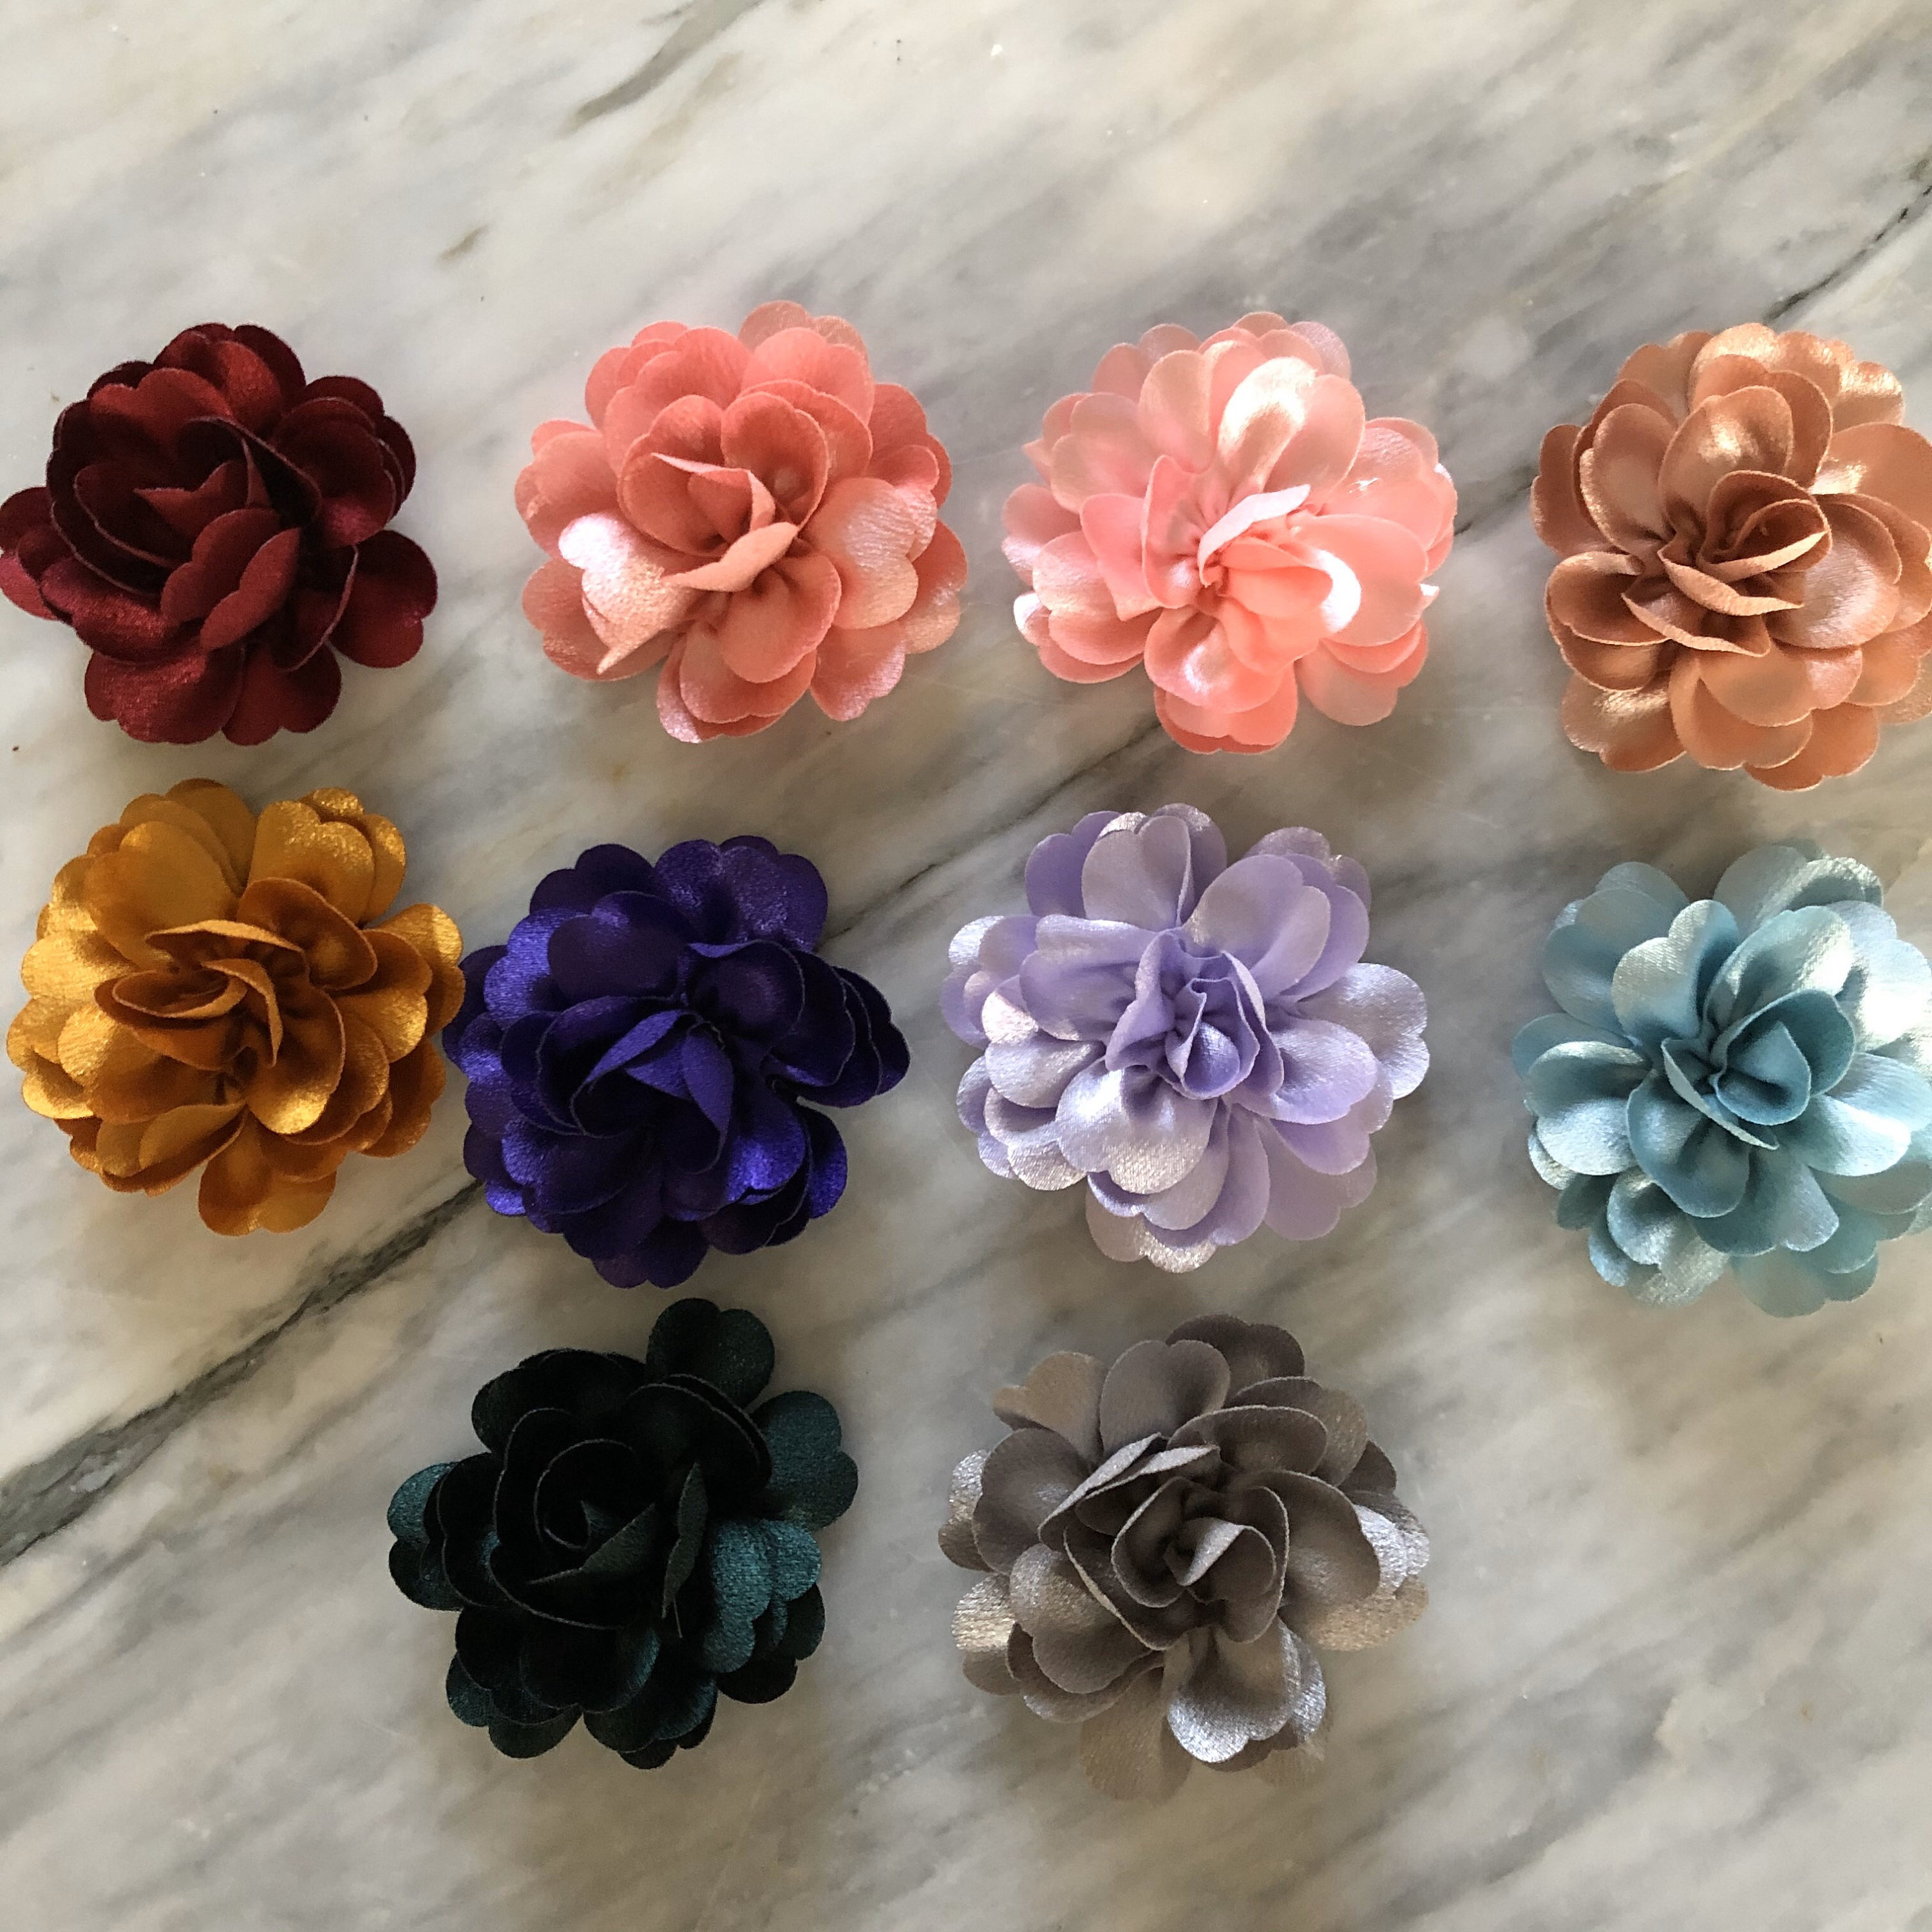 Snadulor Artificial Flowers Heads Bulk 20 Pcs Ribbon Flowers,Satin Ribbon  Flowers Bows Rhinestones Party Wedding Supply Home Decor DIY Craft Hairpin